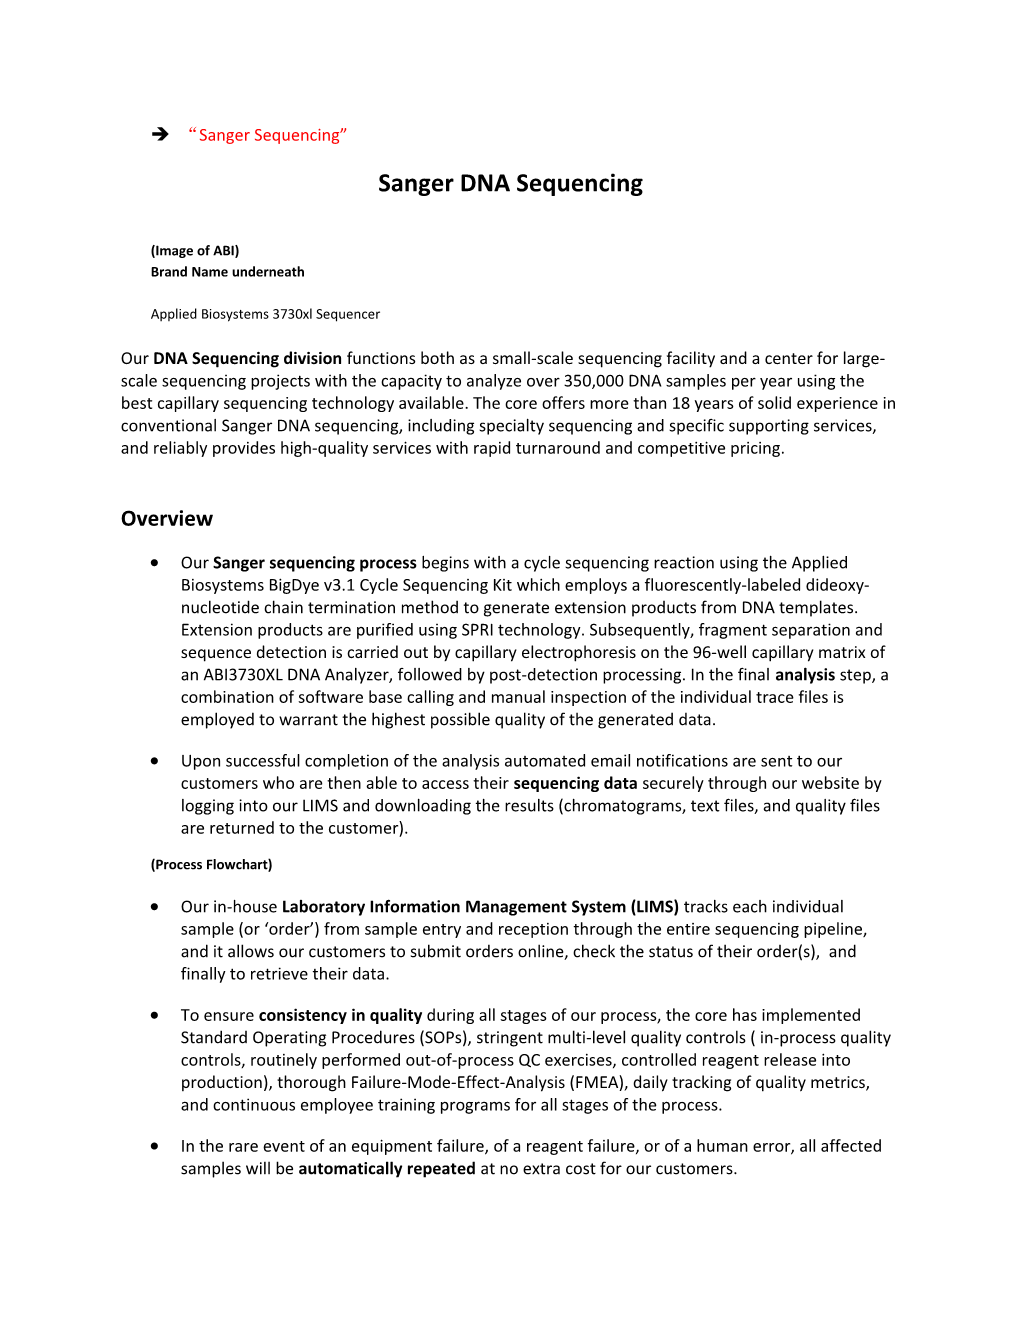 Sanger DNA Sequencing